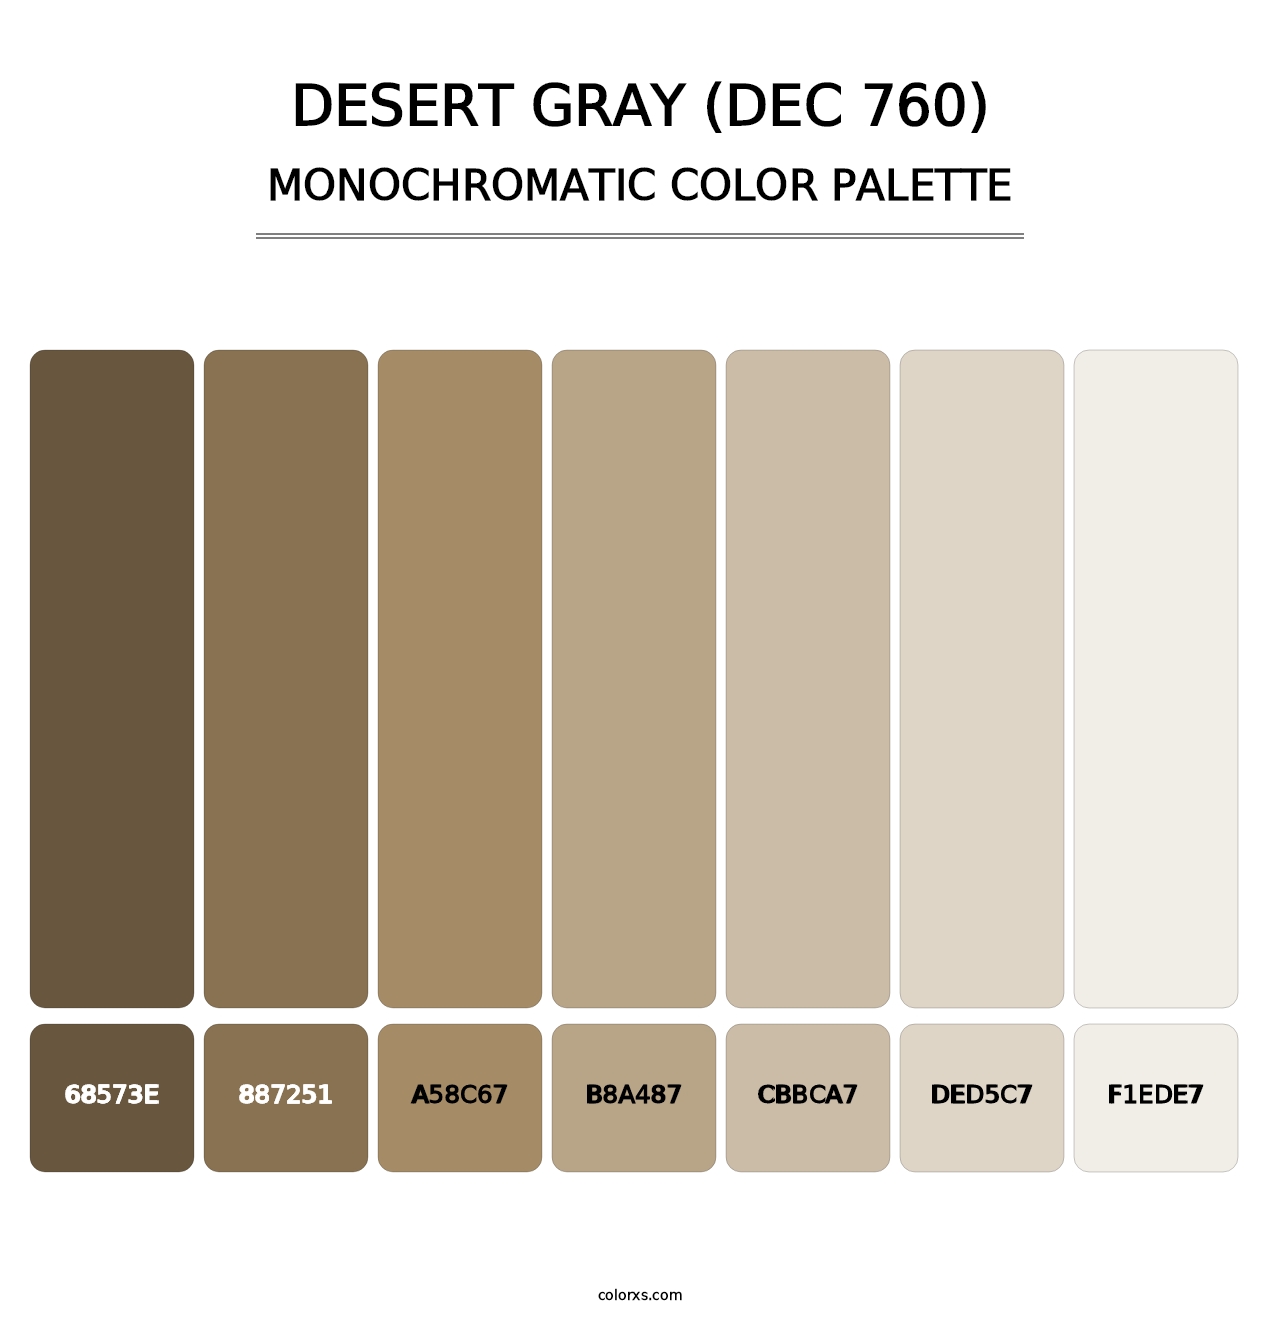 Desert Gray (DEC 760) - Monochromatic Color Palette